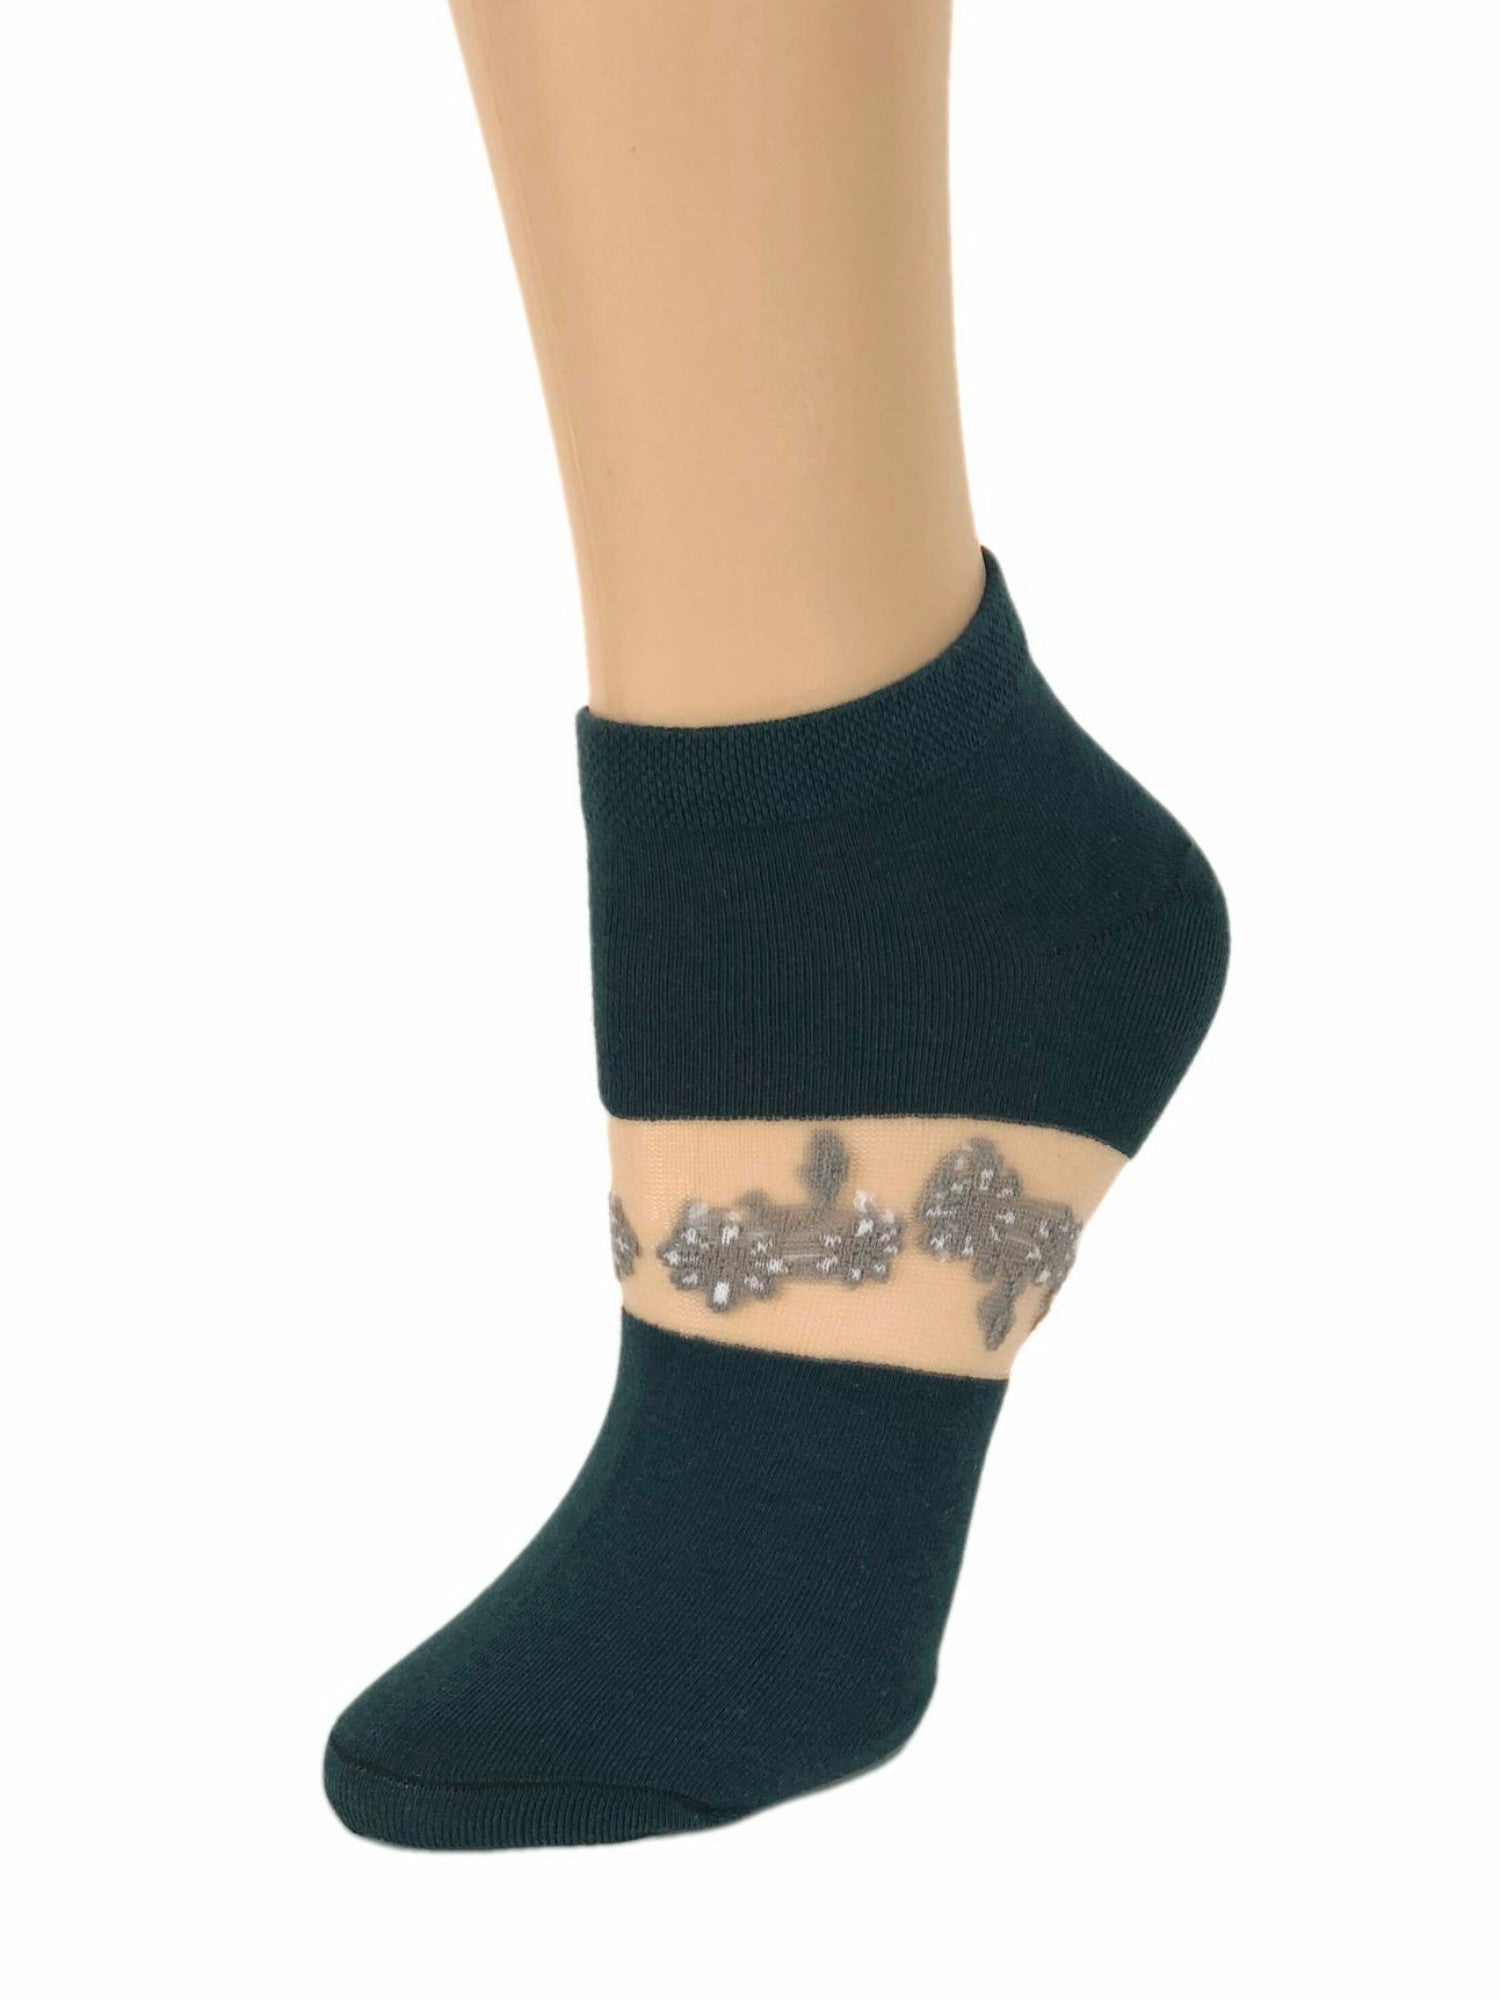 One-Stripped Grey Flower Ankle Sheer Socks - Global Trendz Fashion®